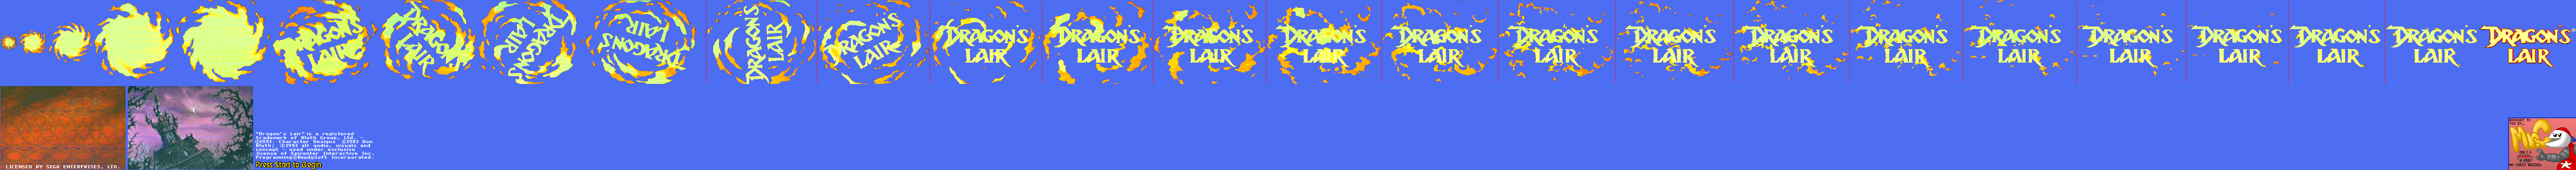 Dragon's Lair - Title Screen